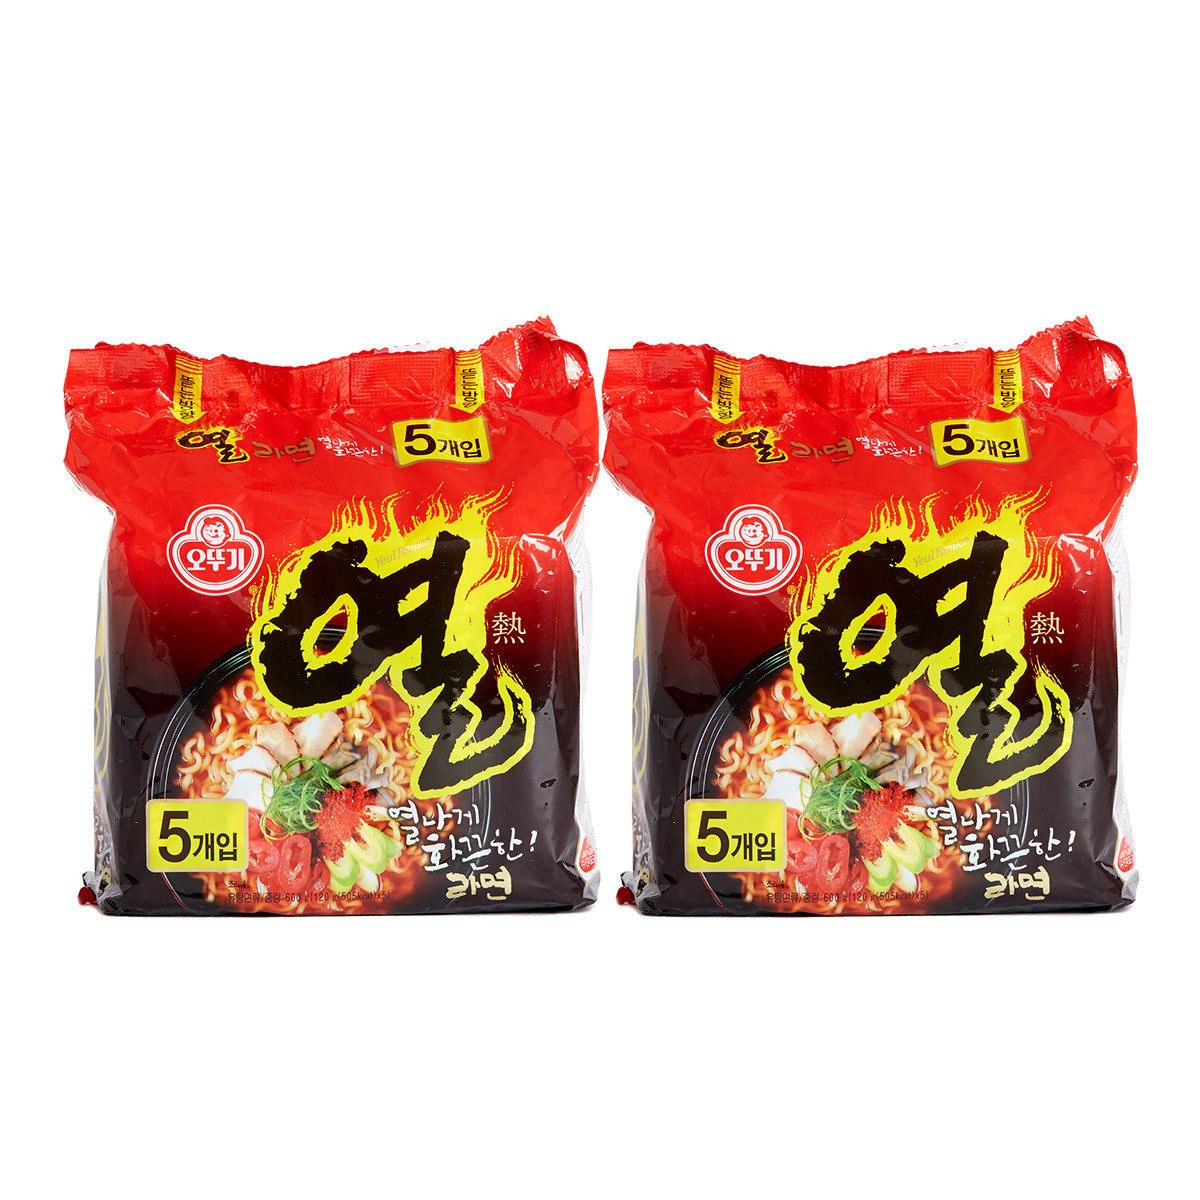 Ottogi 激辣麵 (5包裝)  x 2 袋優惠 (新舊包裝隨機發送)